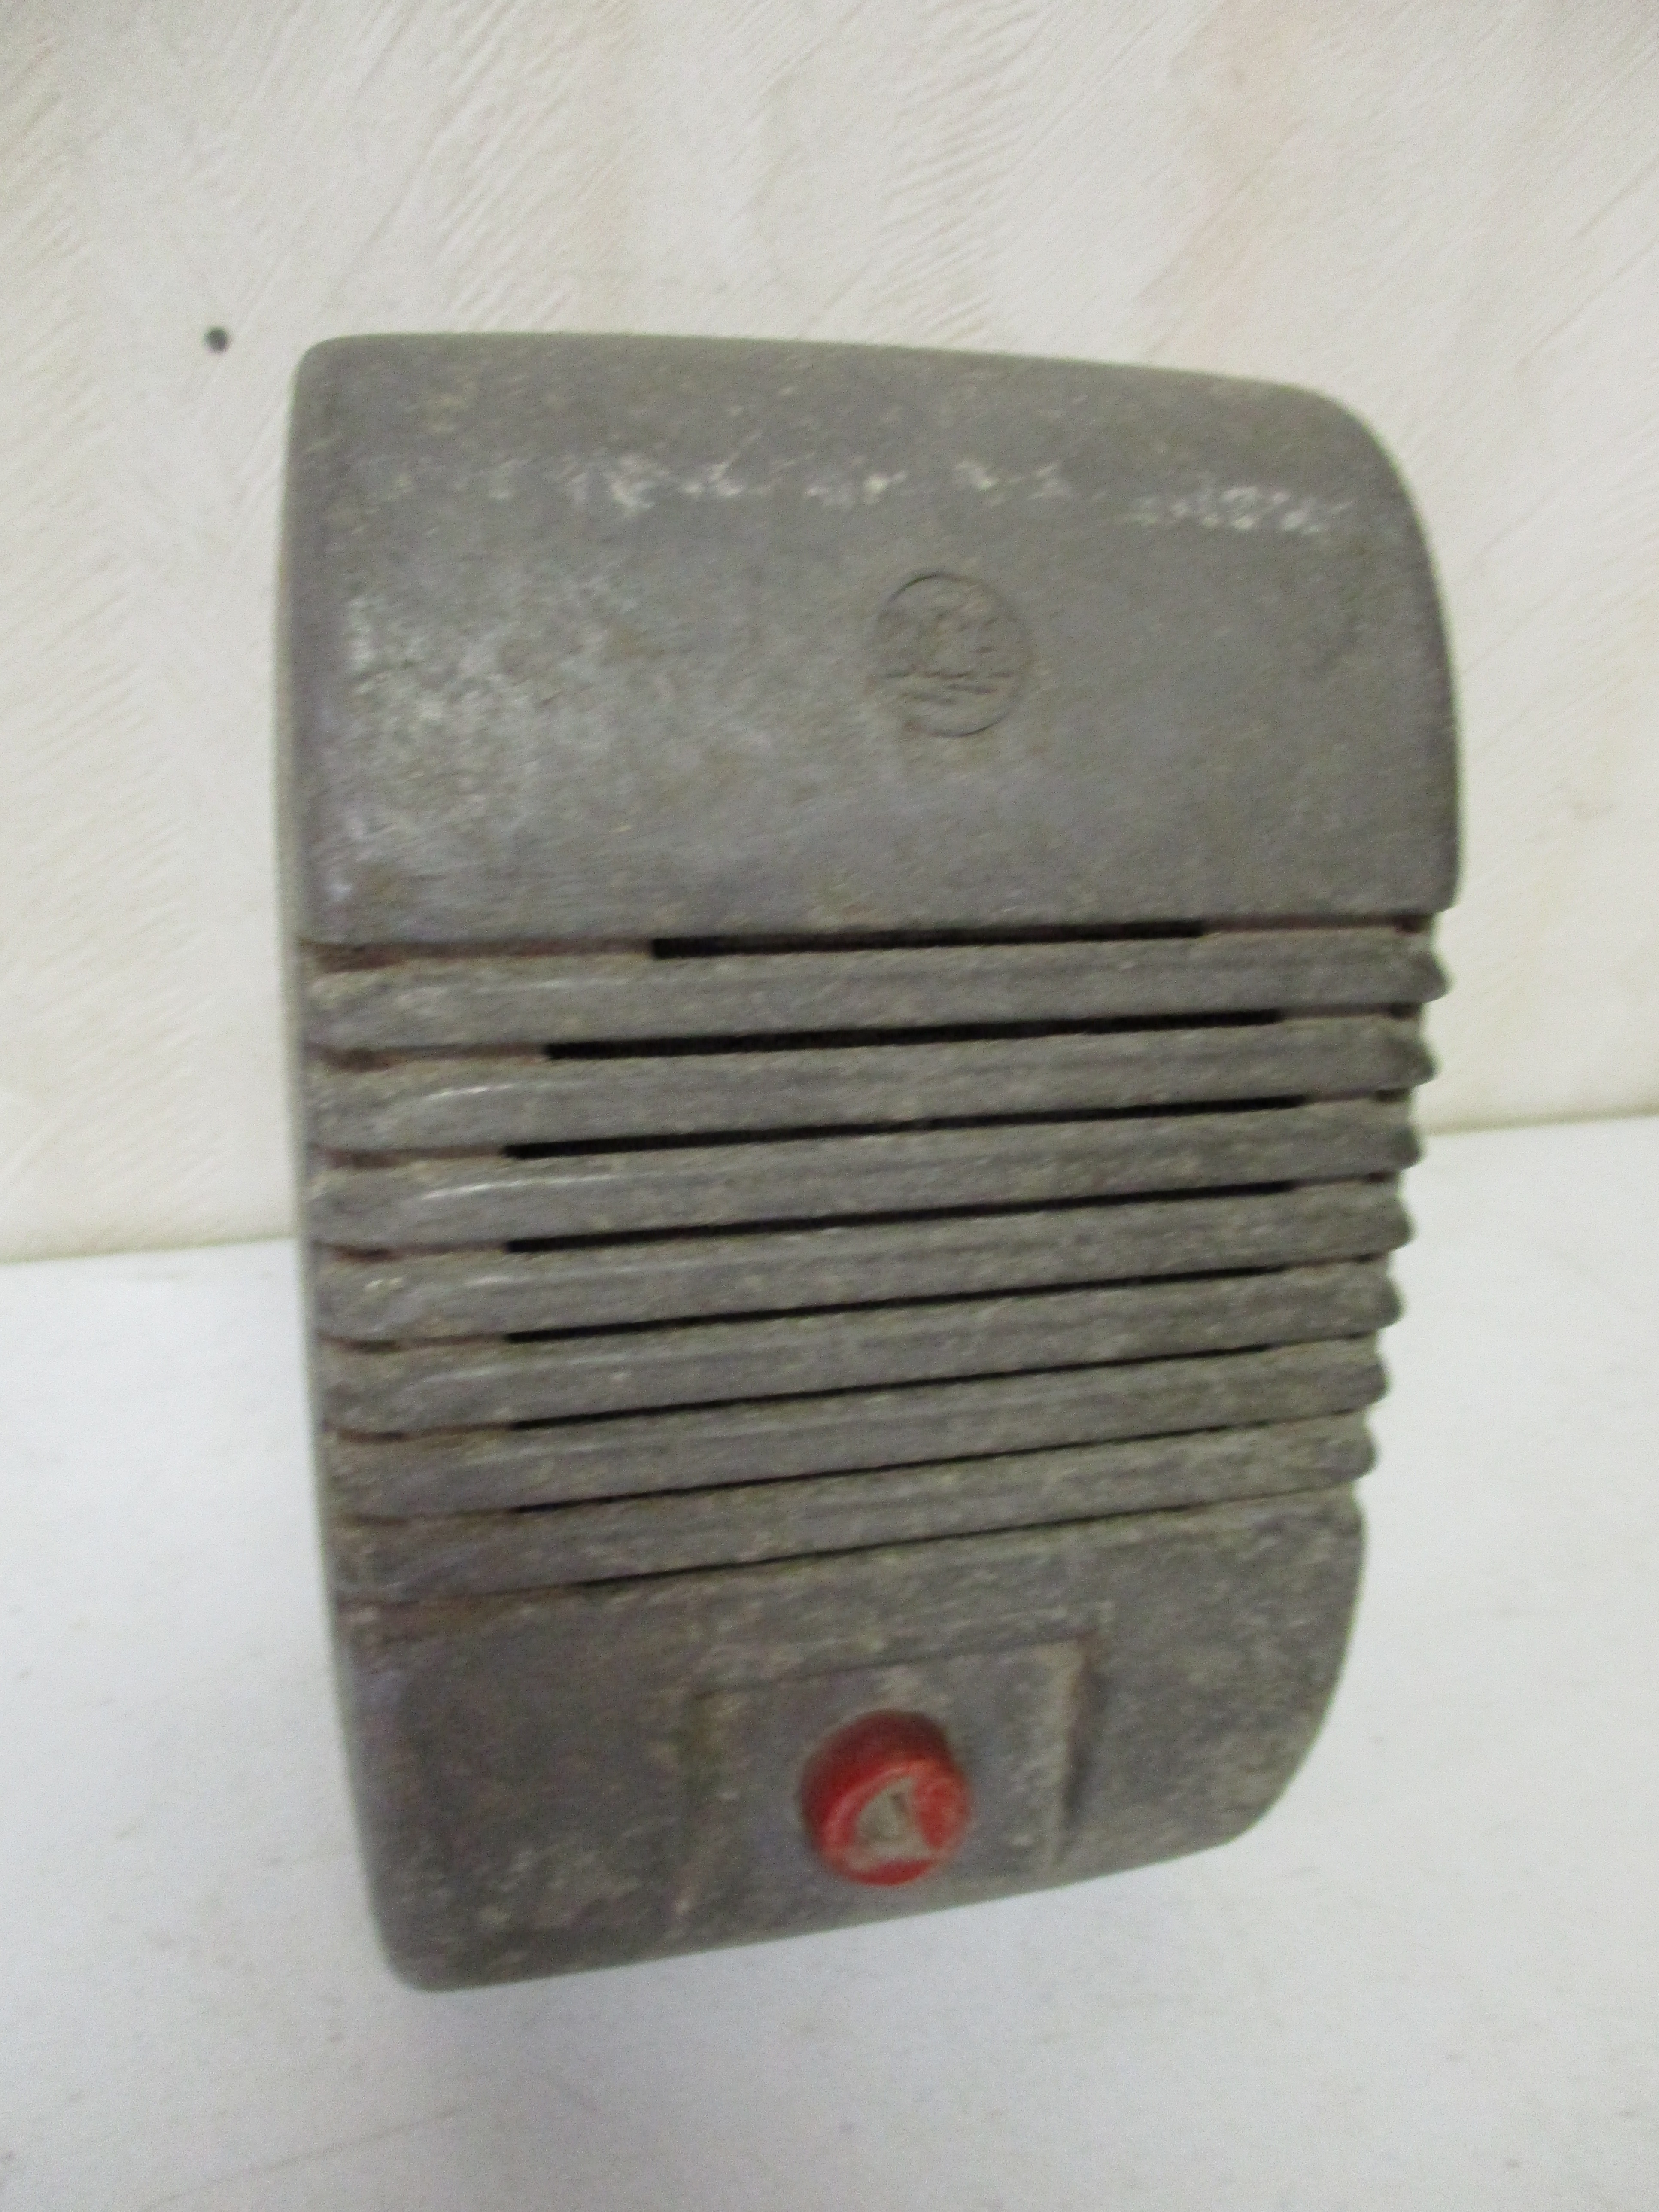 Lot 66: RCA Drive In Speaker